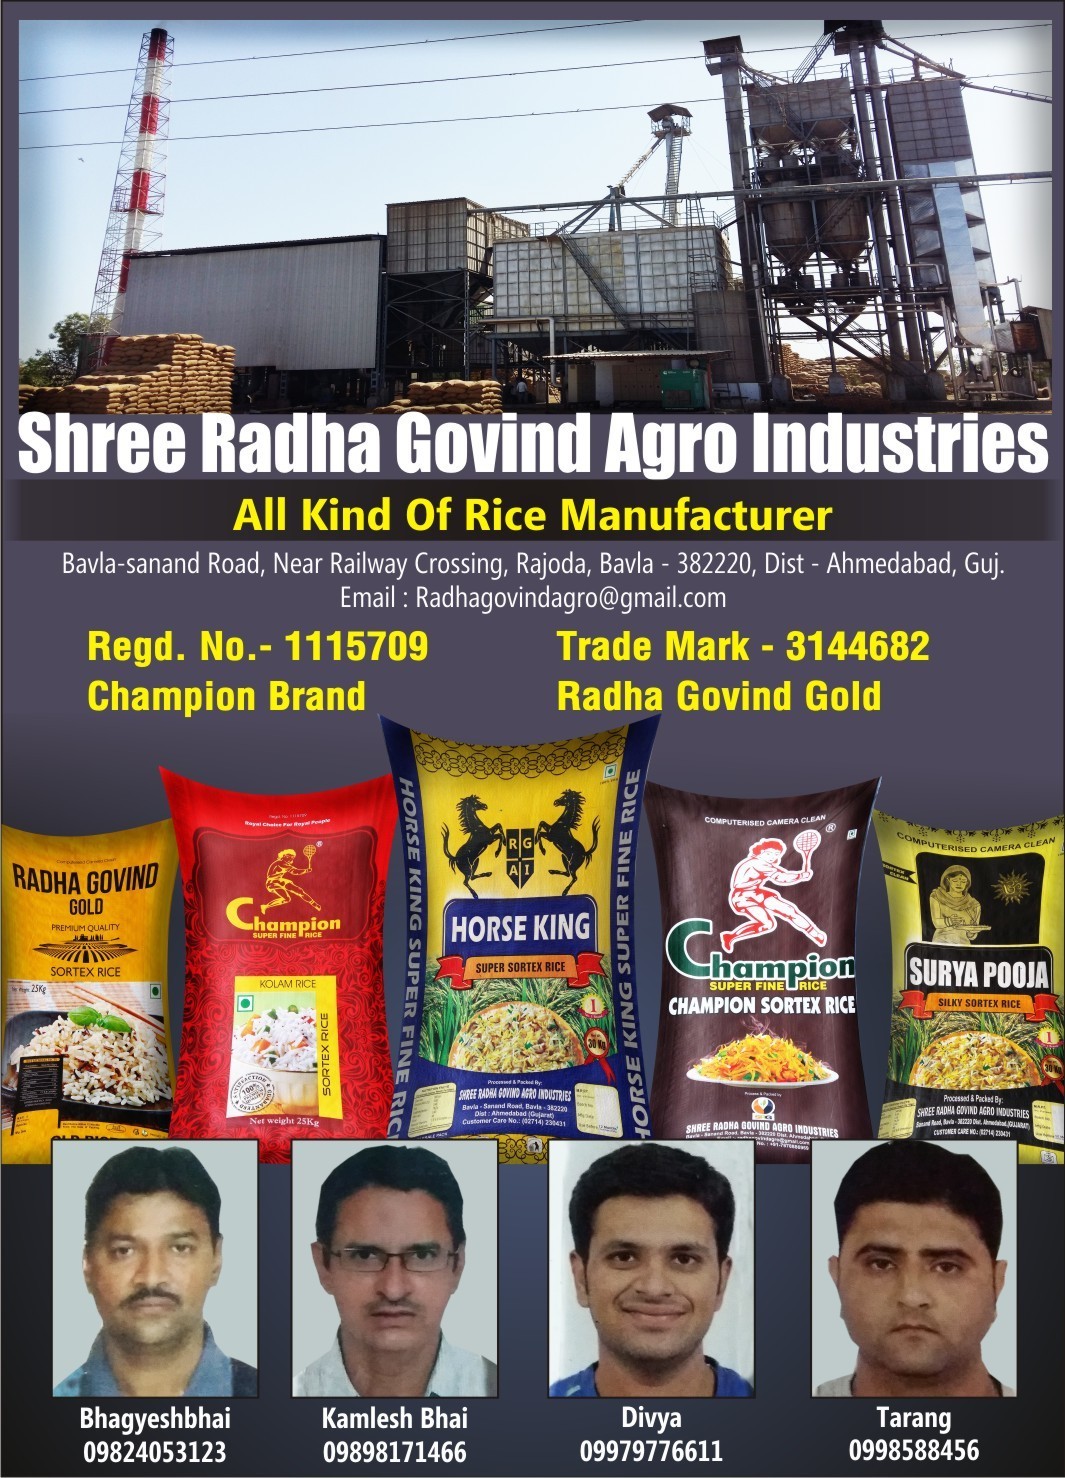 Shree Radha Govind Agro Industries